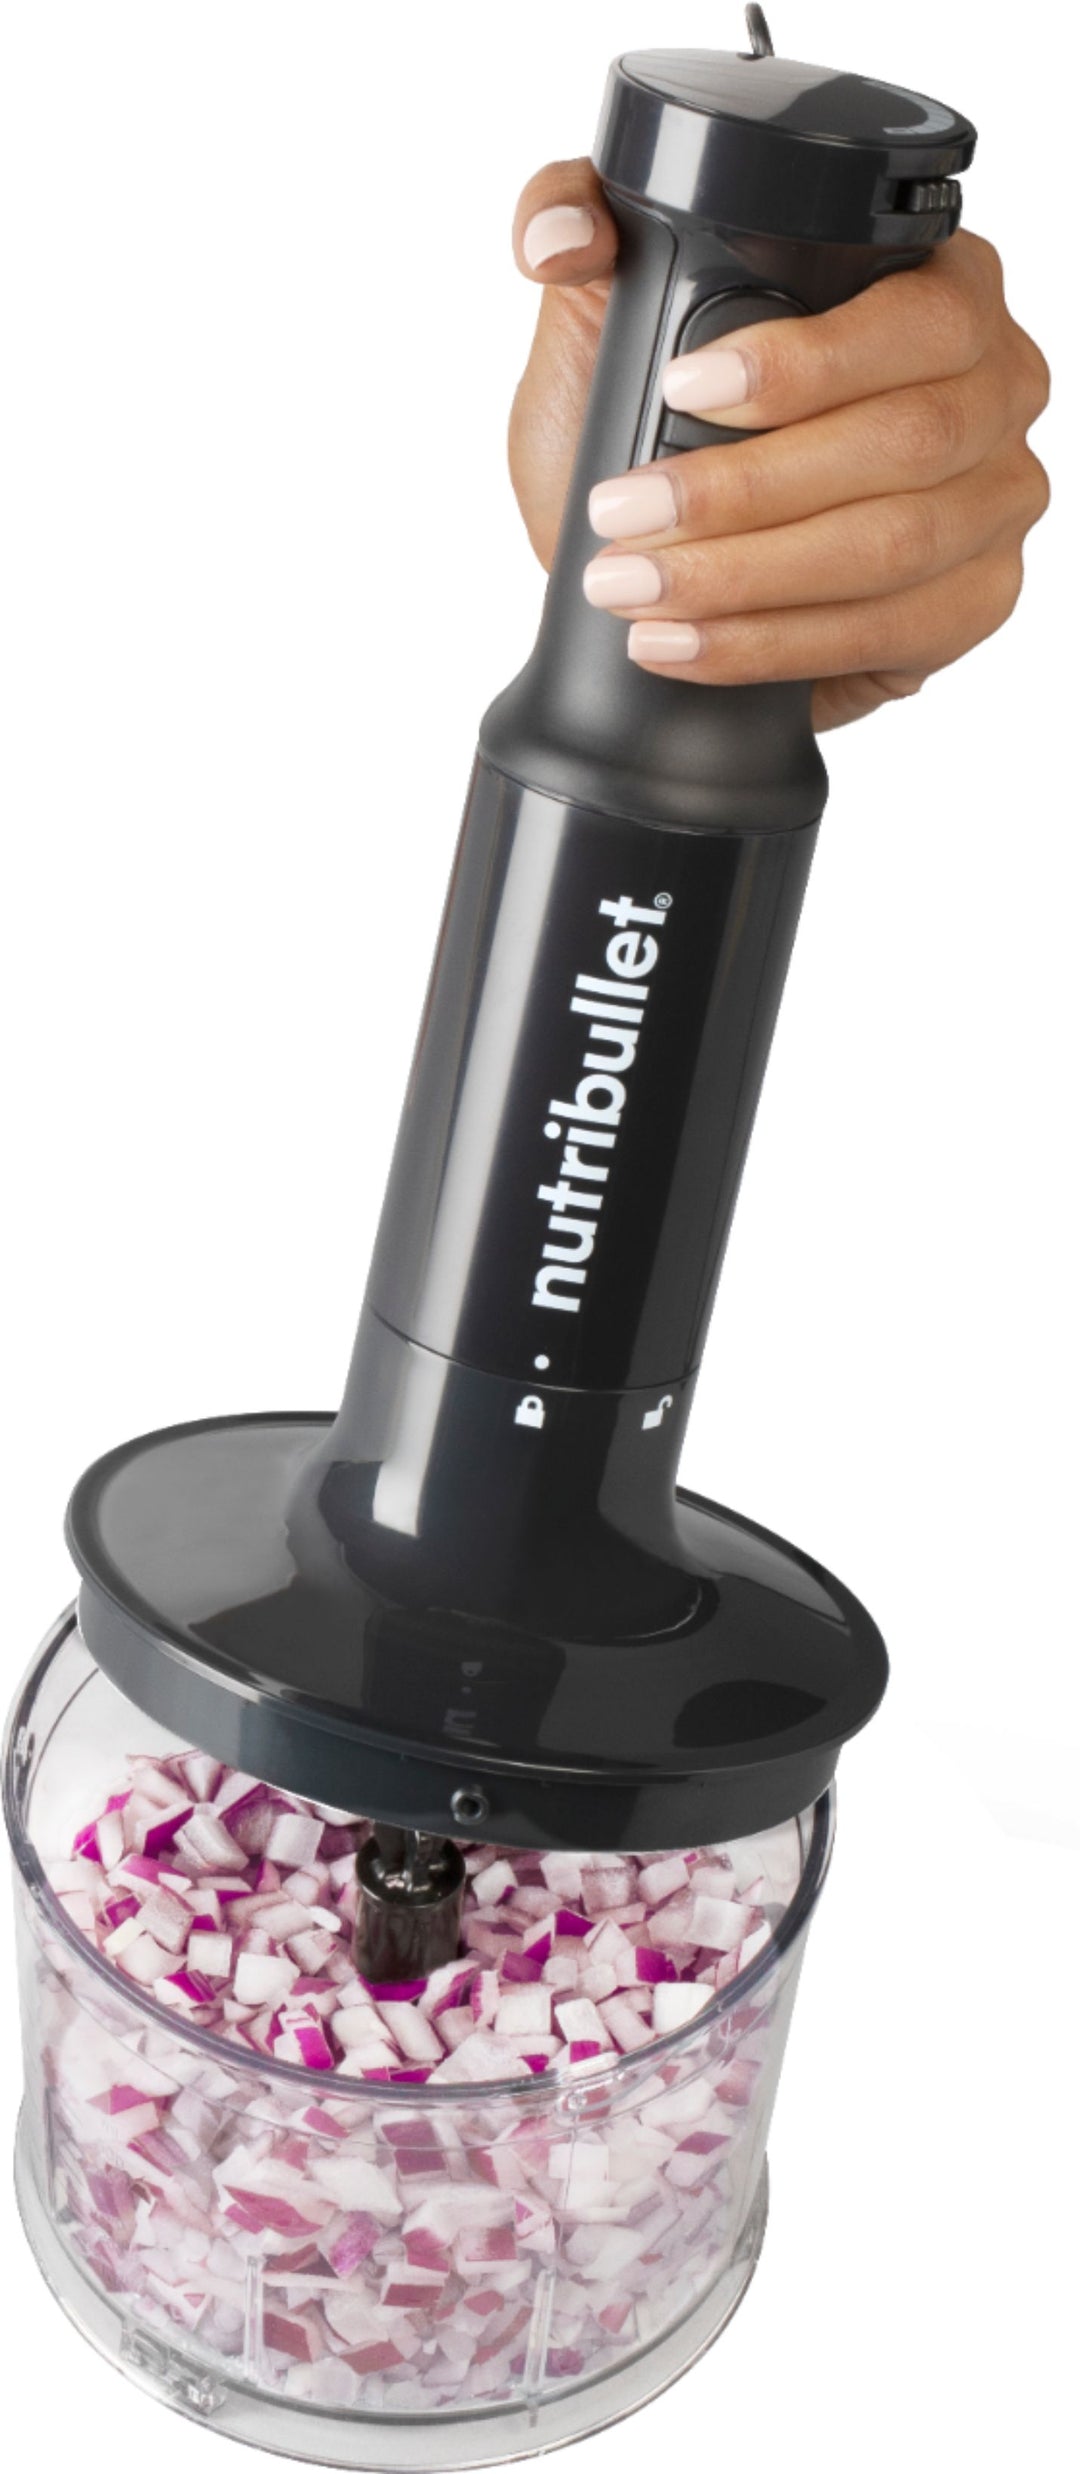 nutribullet Immersion Blender Deluxe with Whisk and Chopper Attachment NBI60100 - Black_3